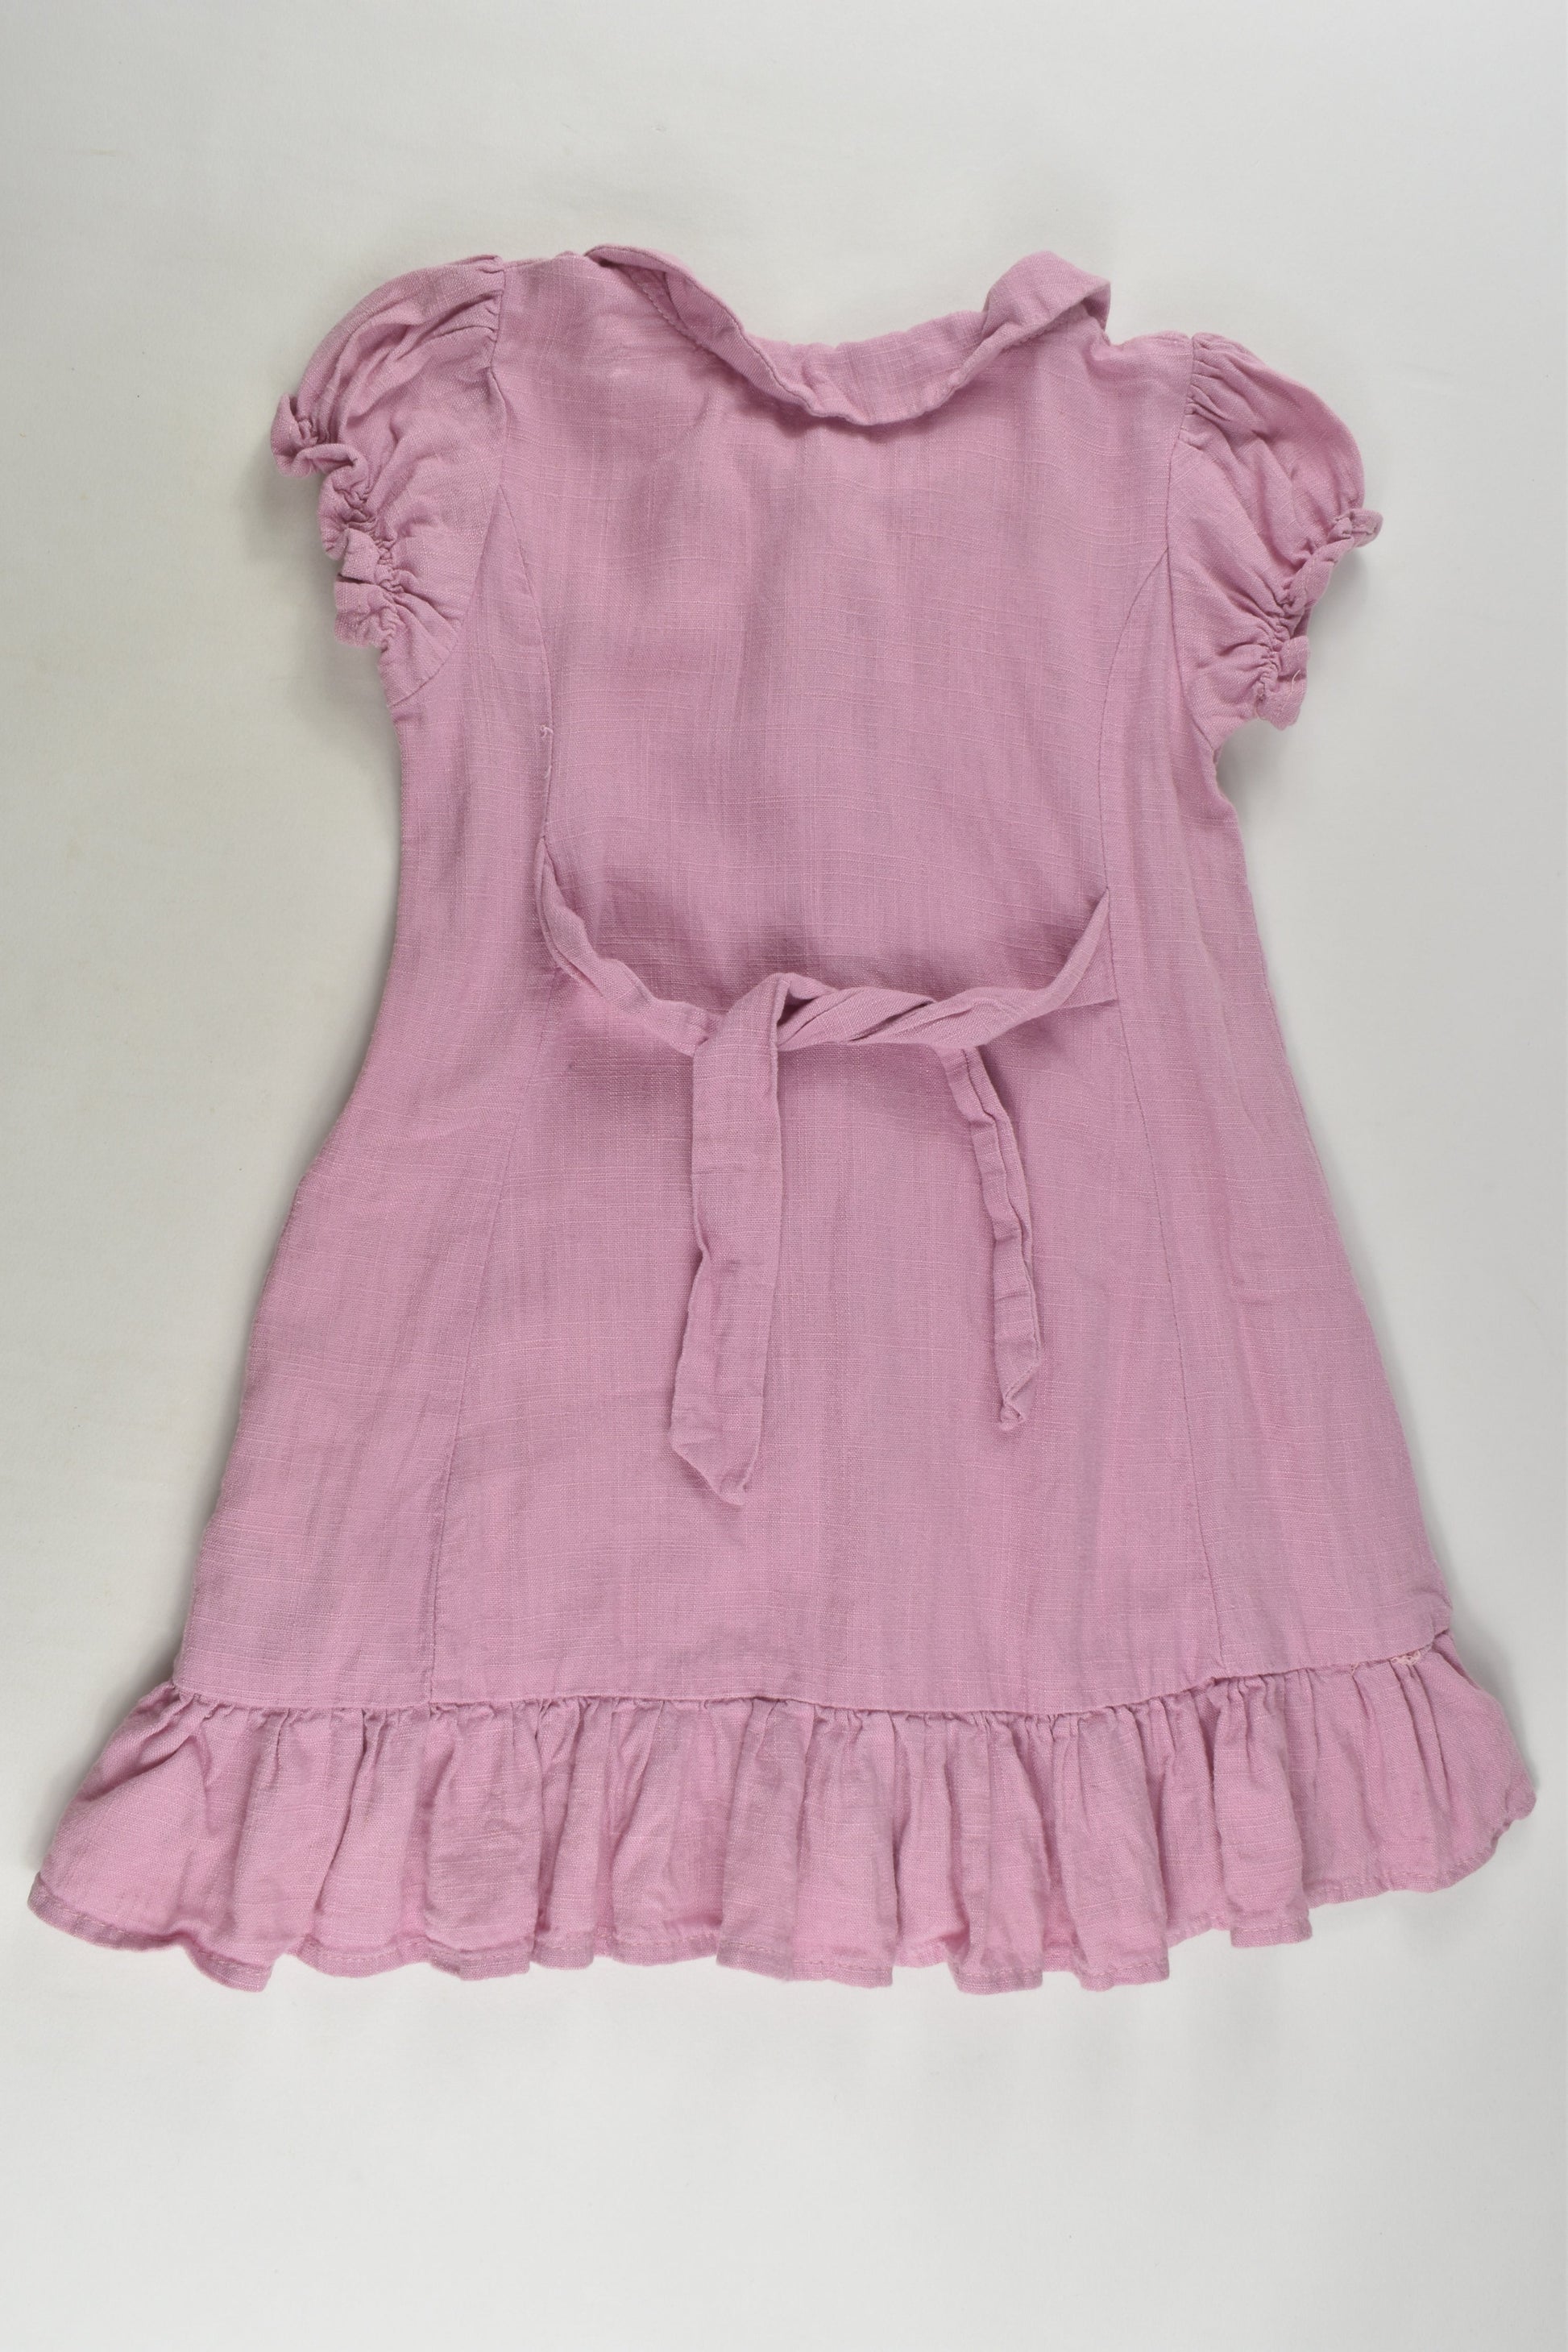 Cotton On Kids Size 3 Linen Blend Dress